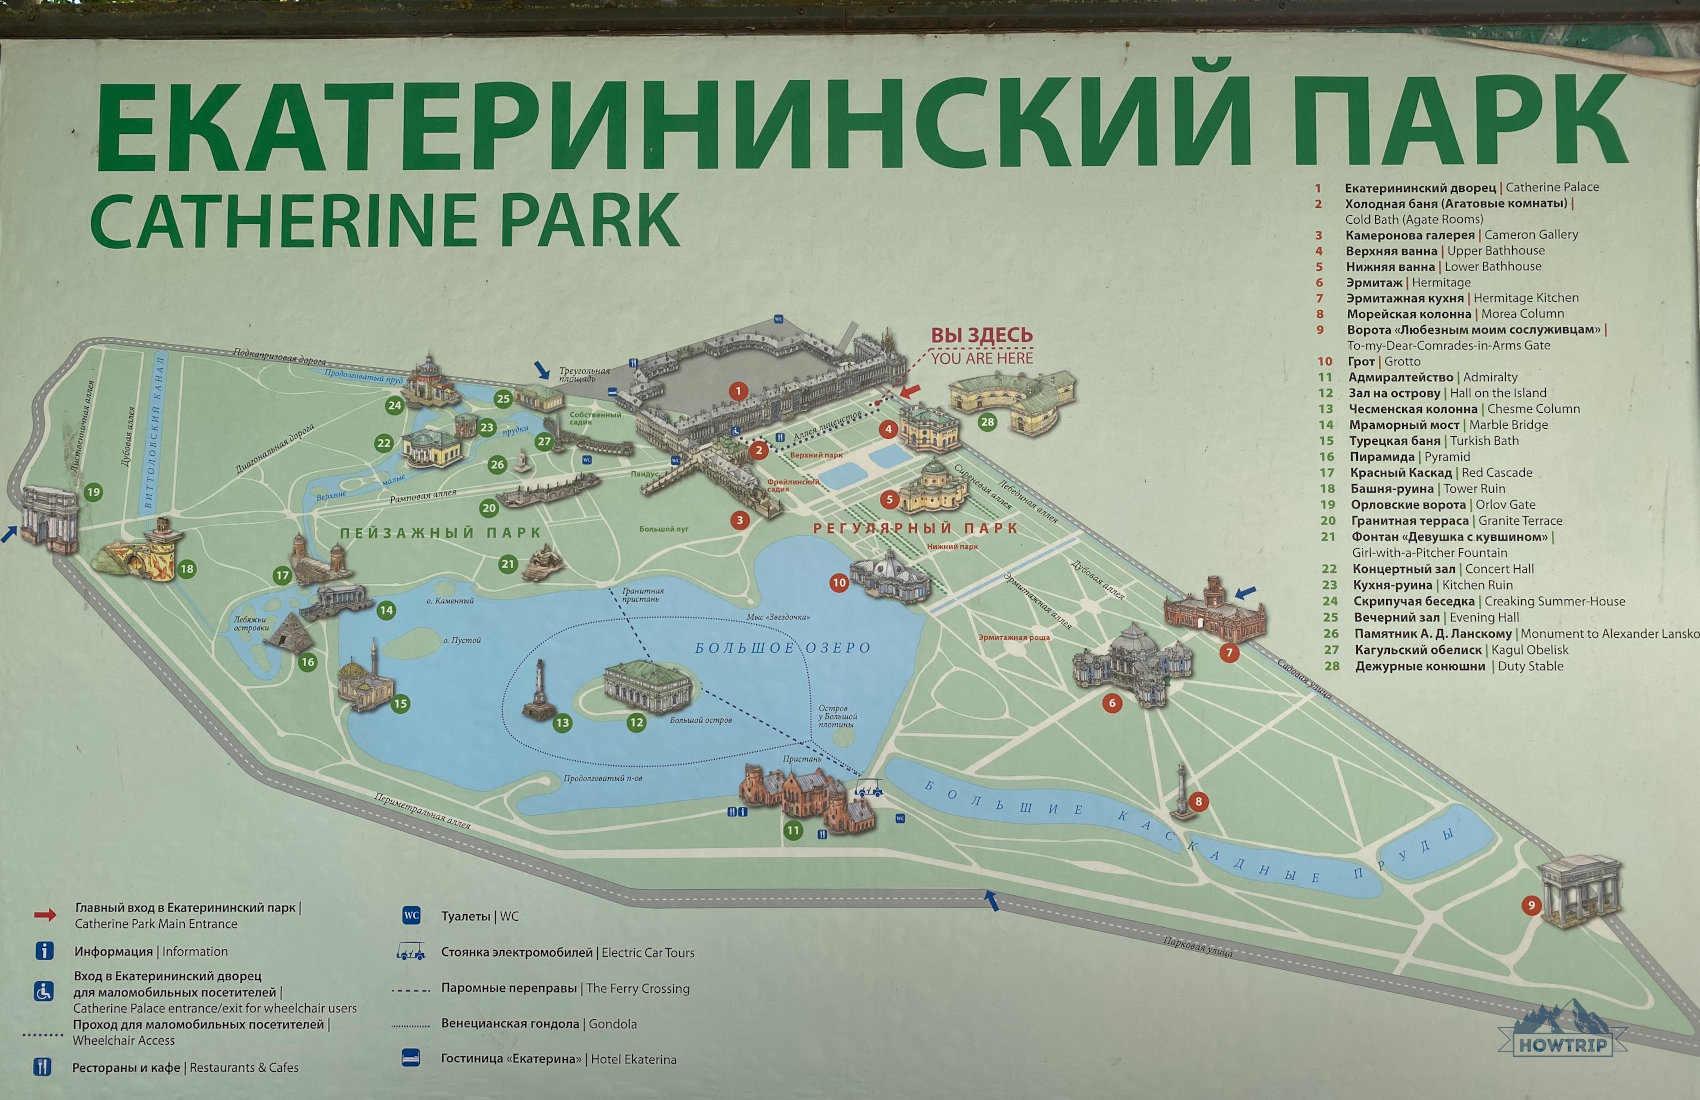 Схема Екатерининского парка